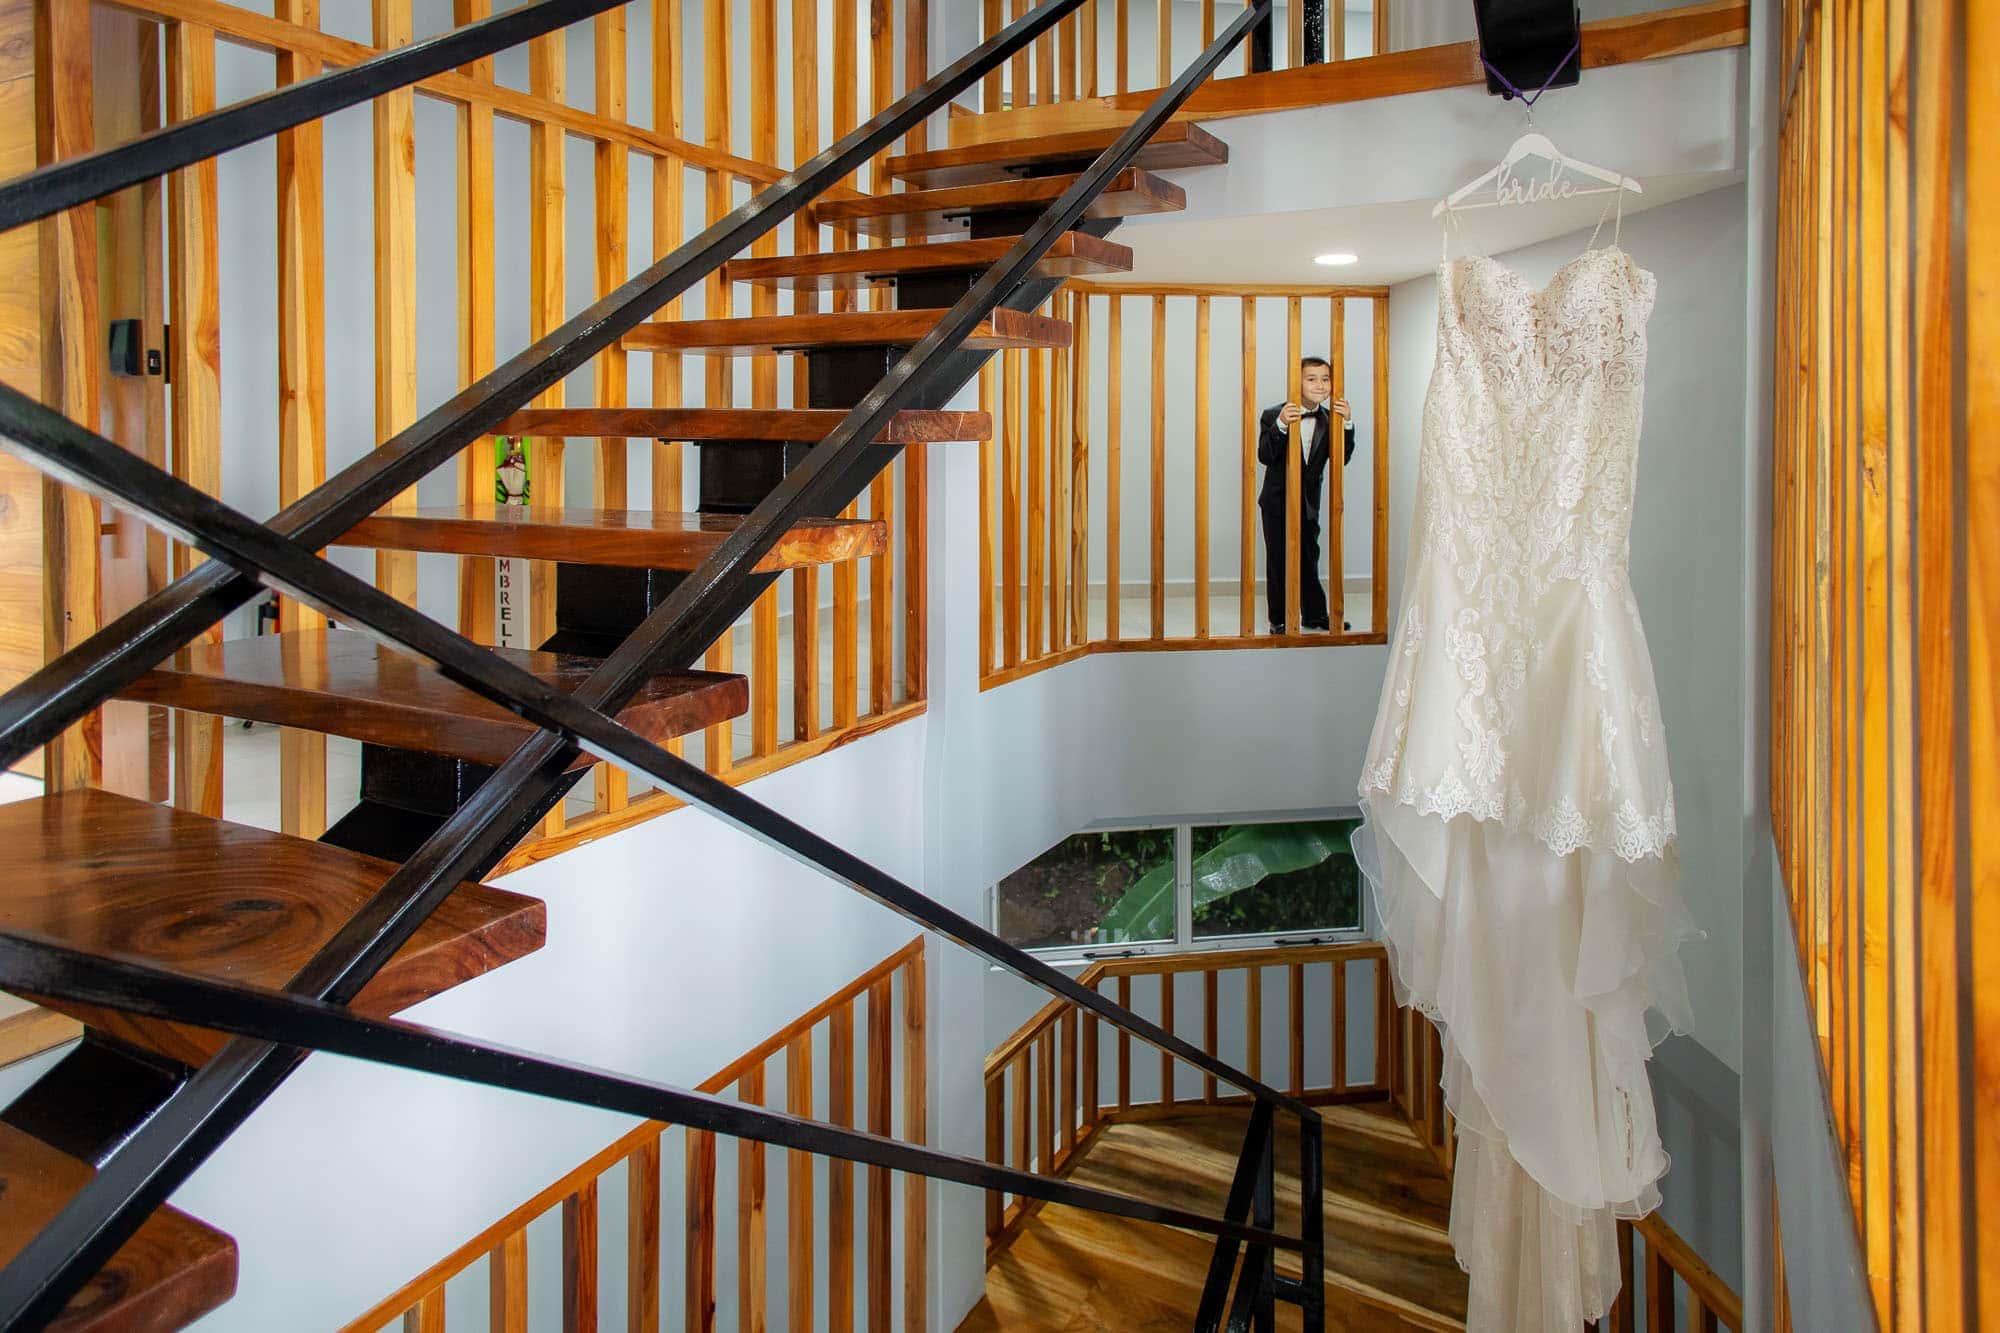 Kid peeks at the wedding dress hanging in an unusual stairwell